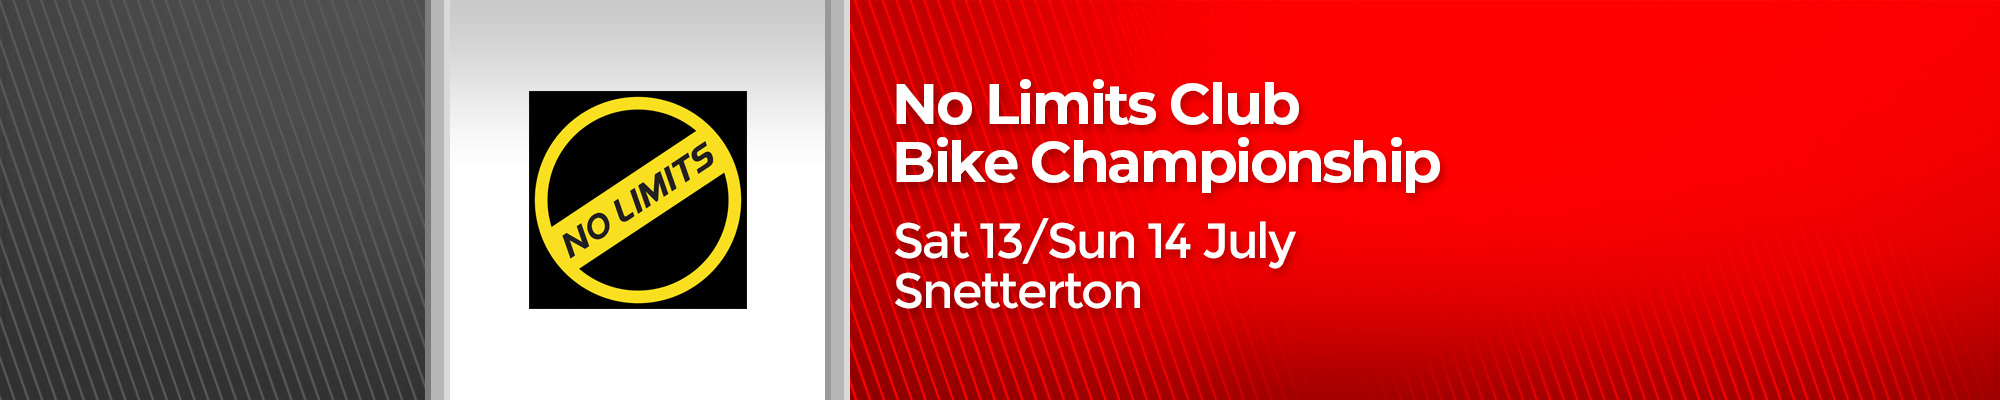 No Limits Club Bike Championships